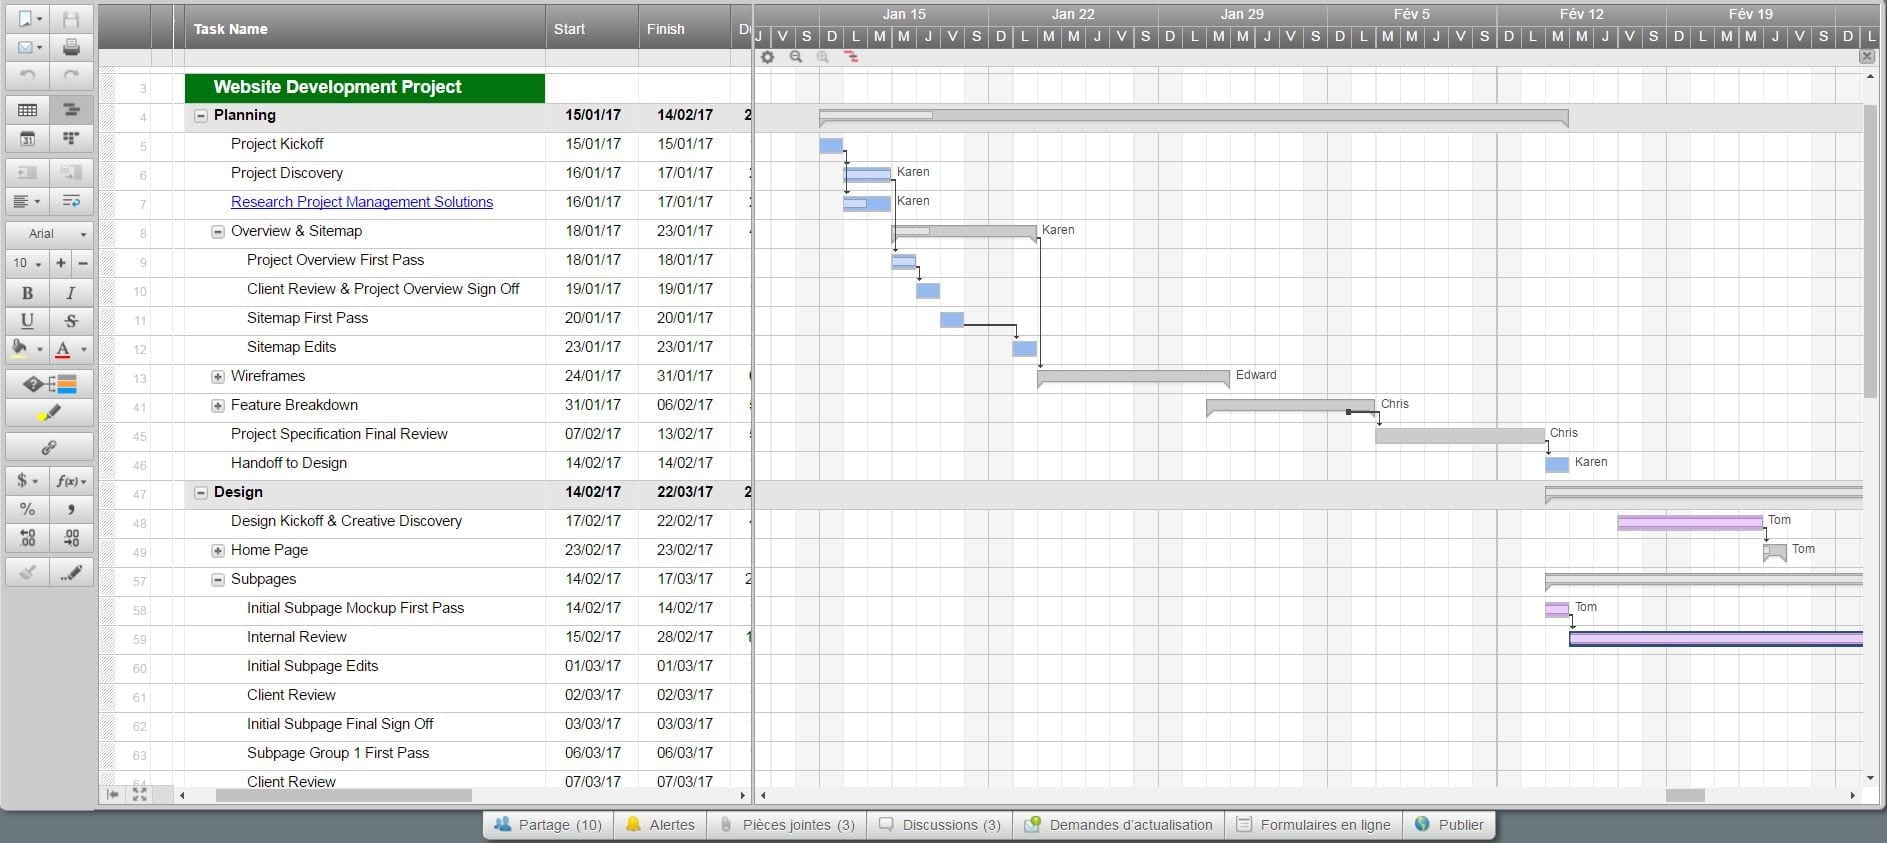 Timeline Spreadsheet Template Timeline Spreadsheet Spreadsheet Templates for Busines ...